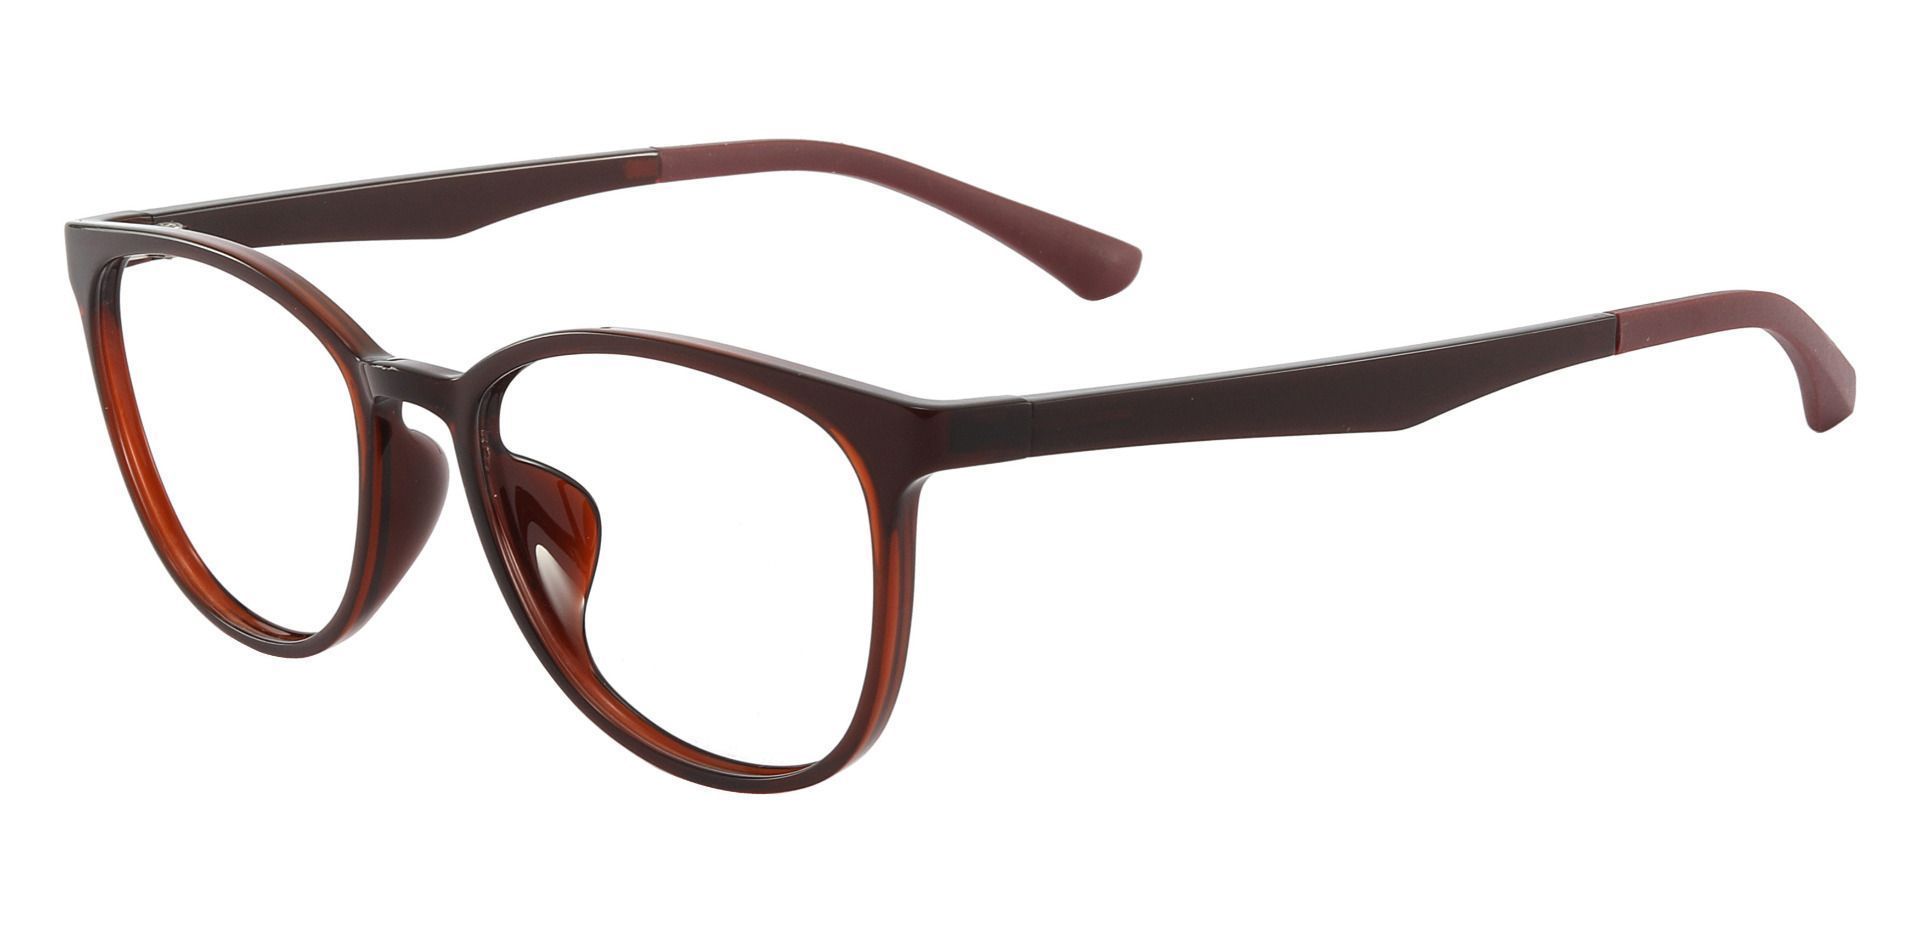 Pembroke Oval Prescription Glasses - Brown